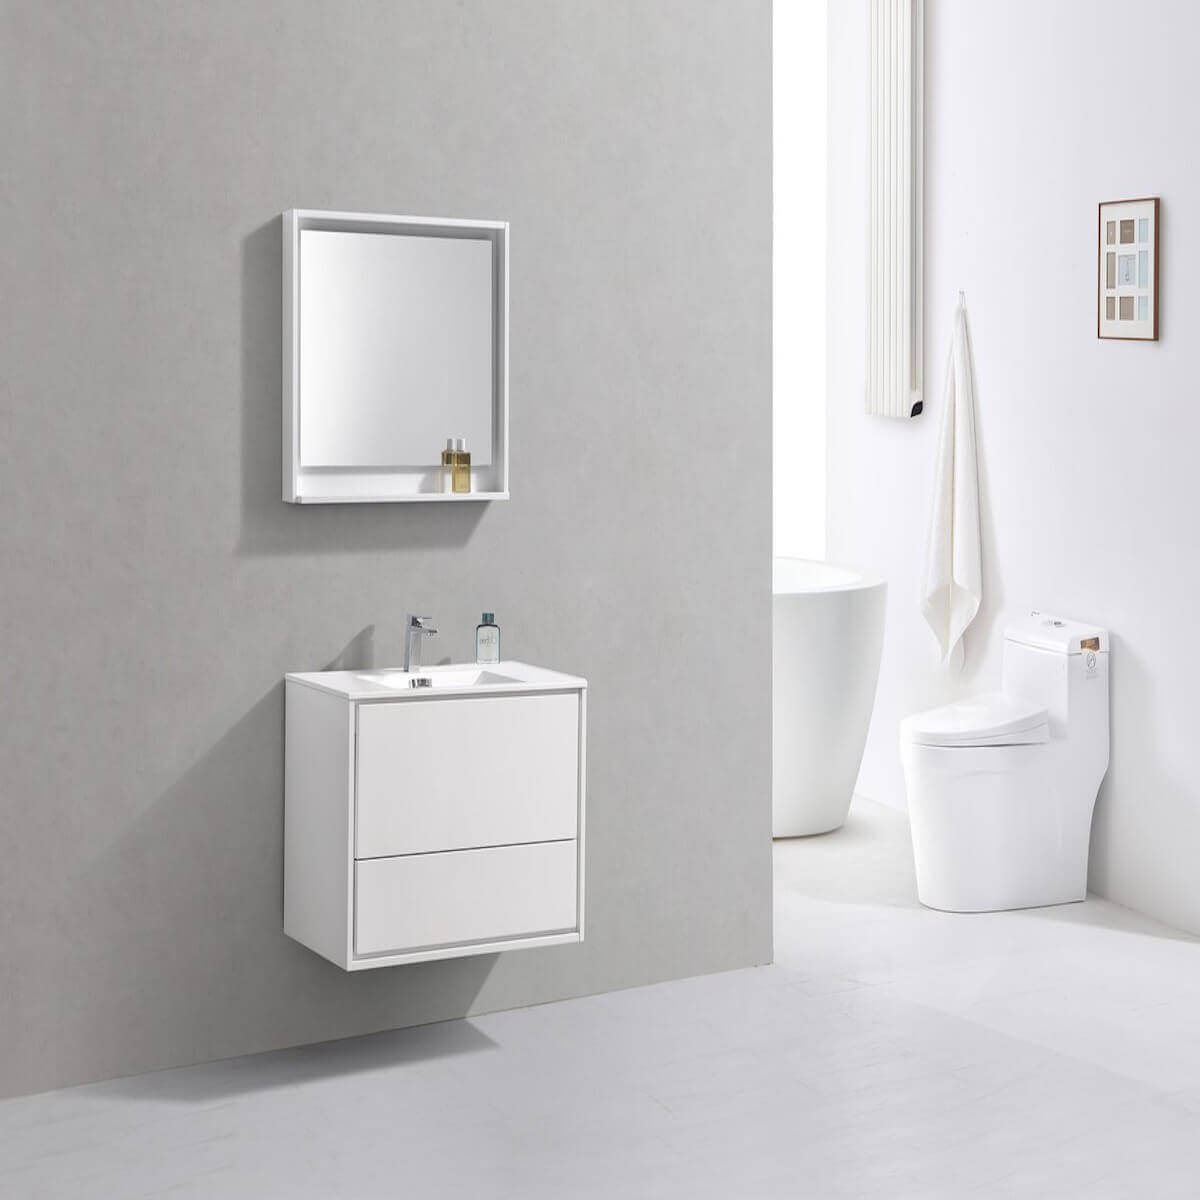 KubeBath DeLusso 36" Gloss White Wall Mount Single Vanity DL36-GW in Bathroom #finish_high gloss white